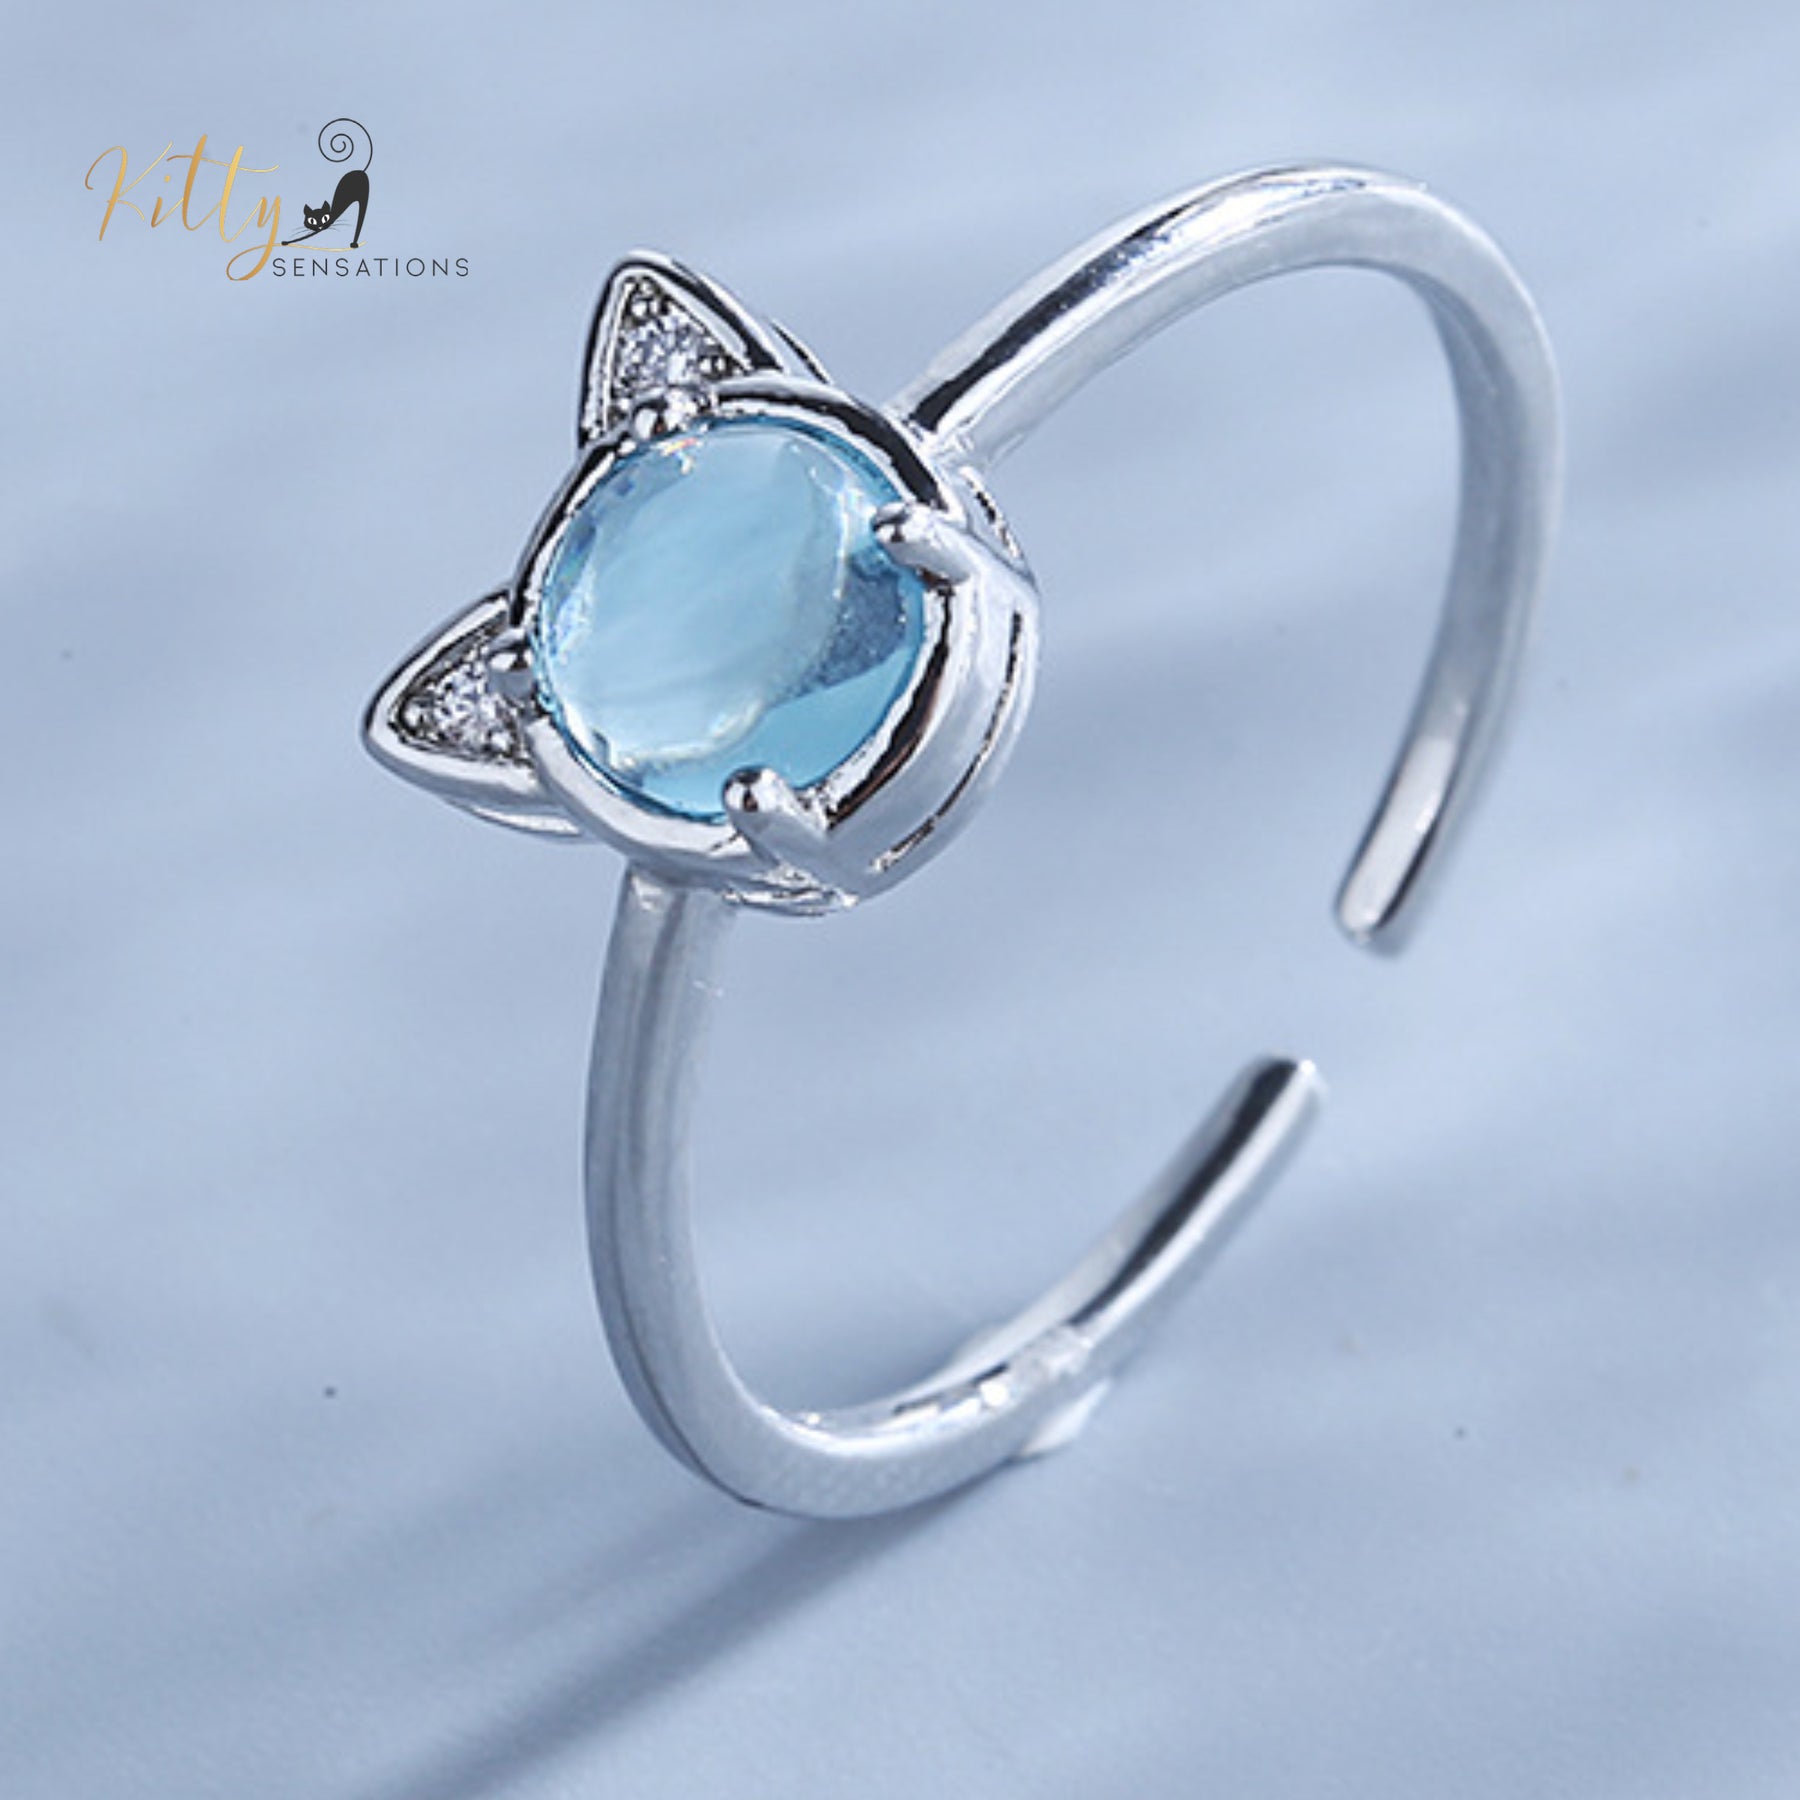 Glacier Crystal Cat Ring - Silver Plated- Adjustable